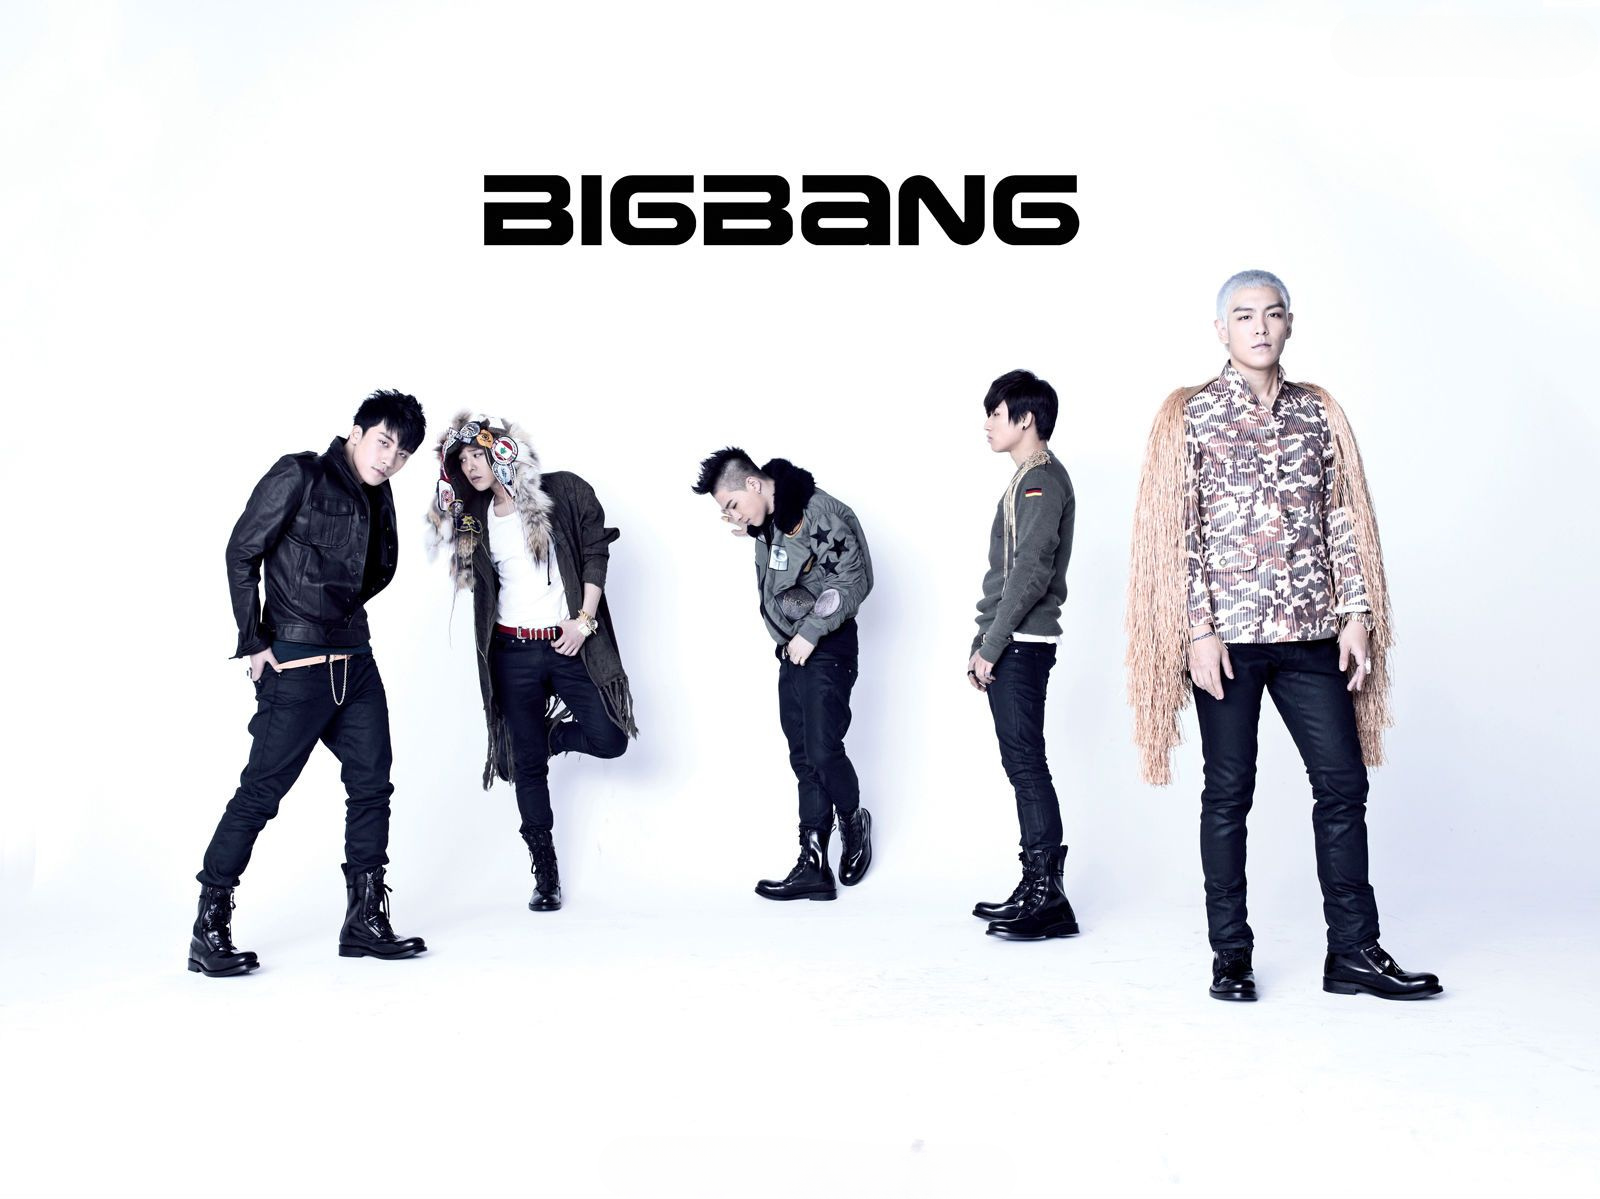 Alla5 Medlemmar I Bigbang: G-dragon, T.o.p, Taeyang, Daesung Och Seungri